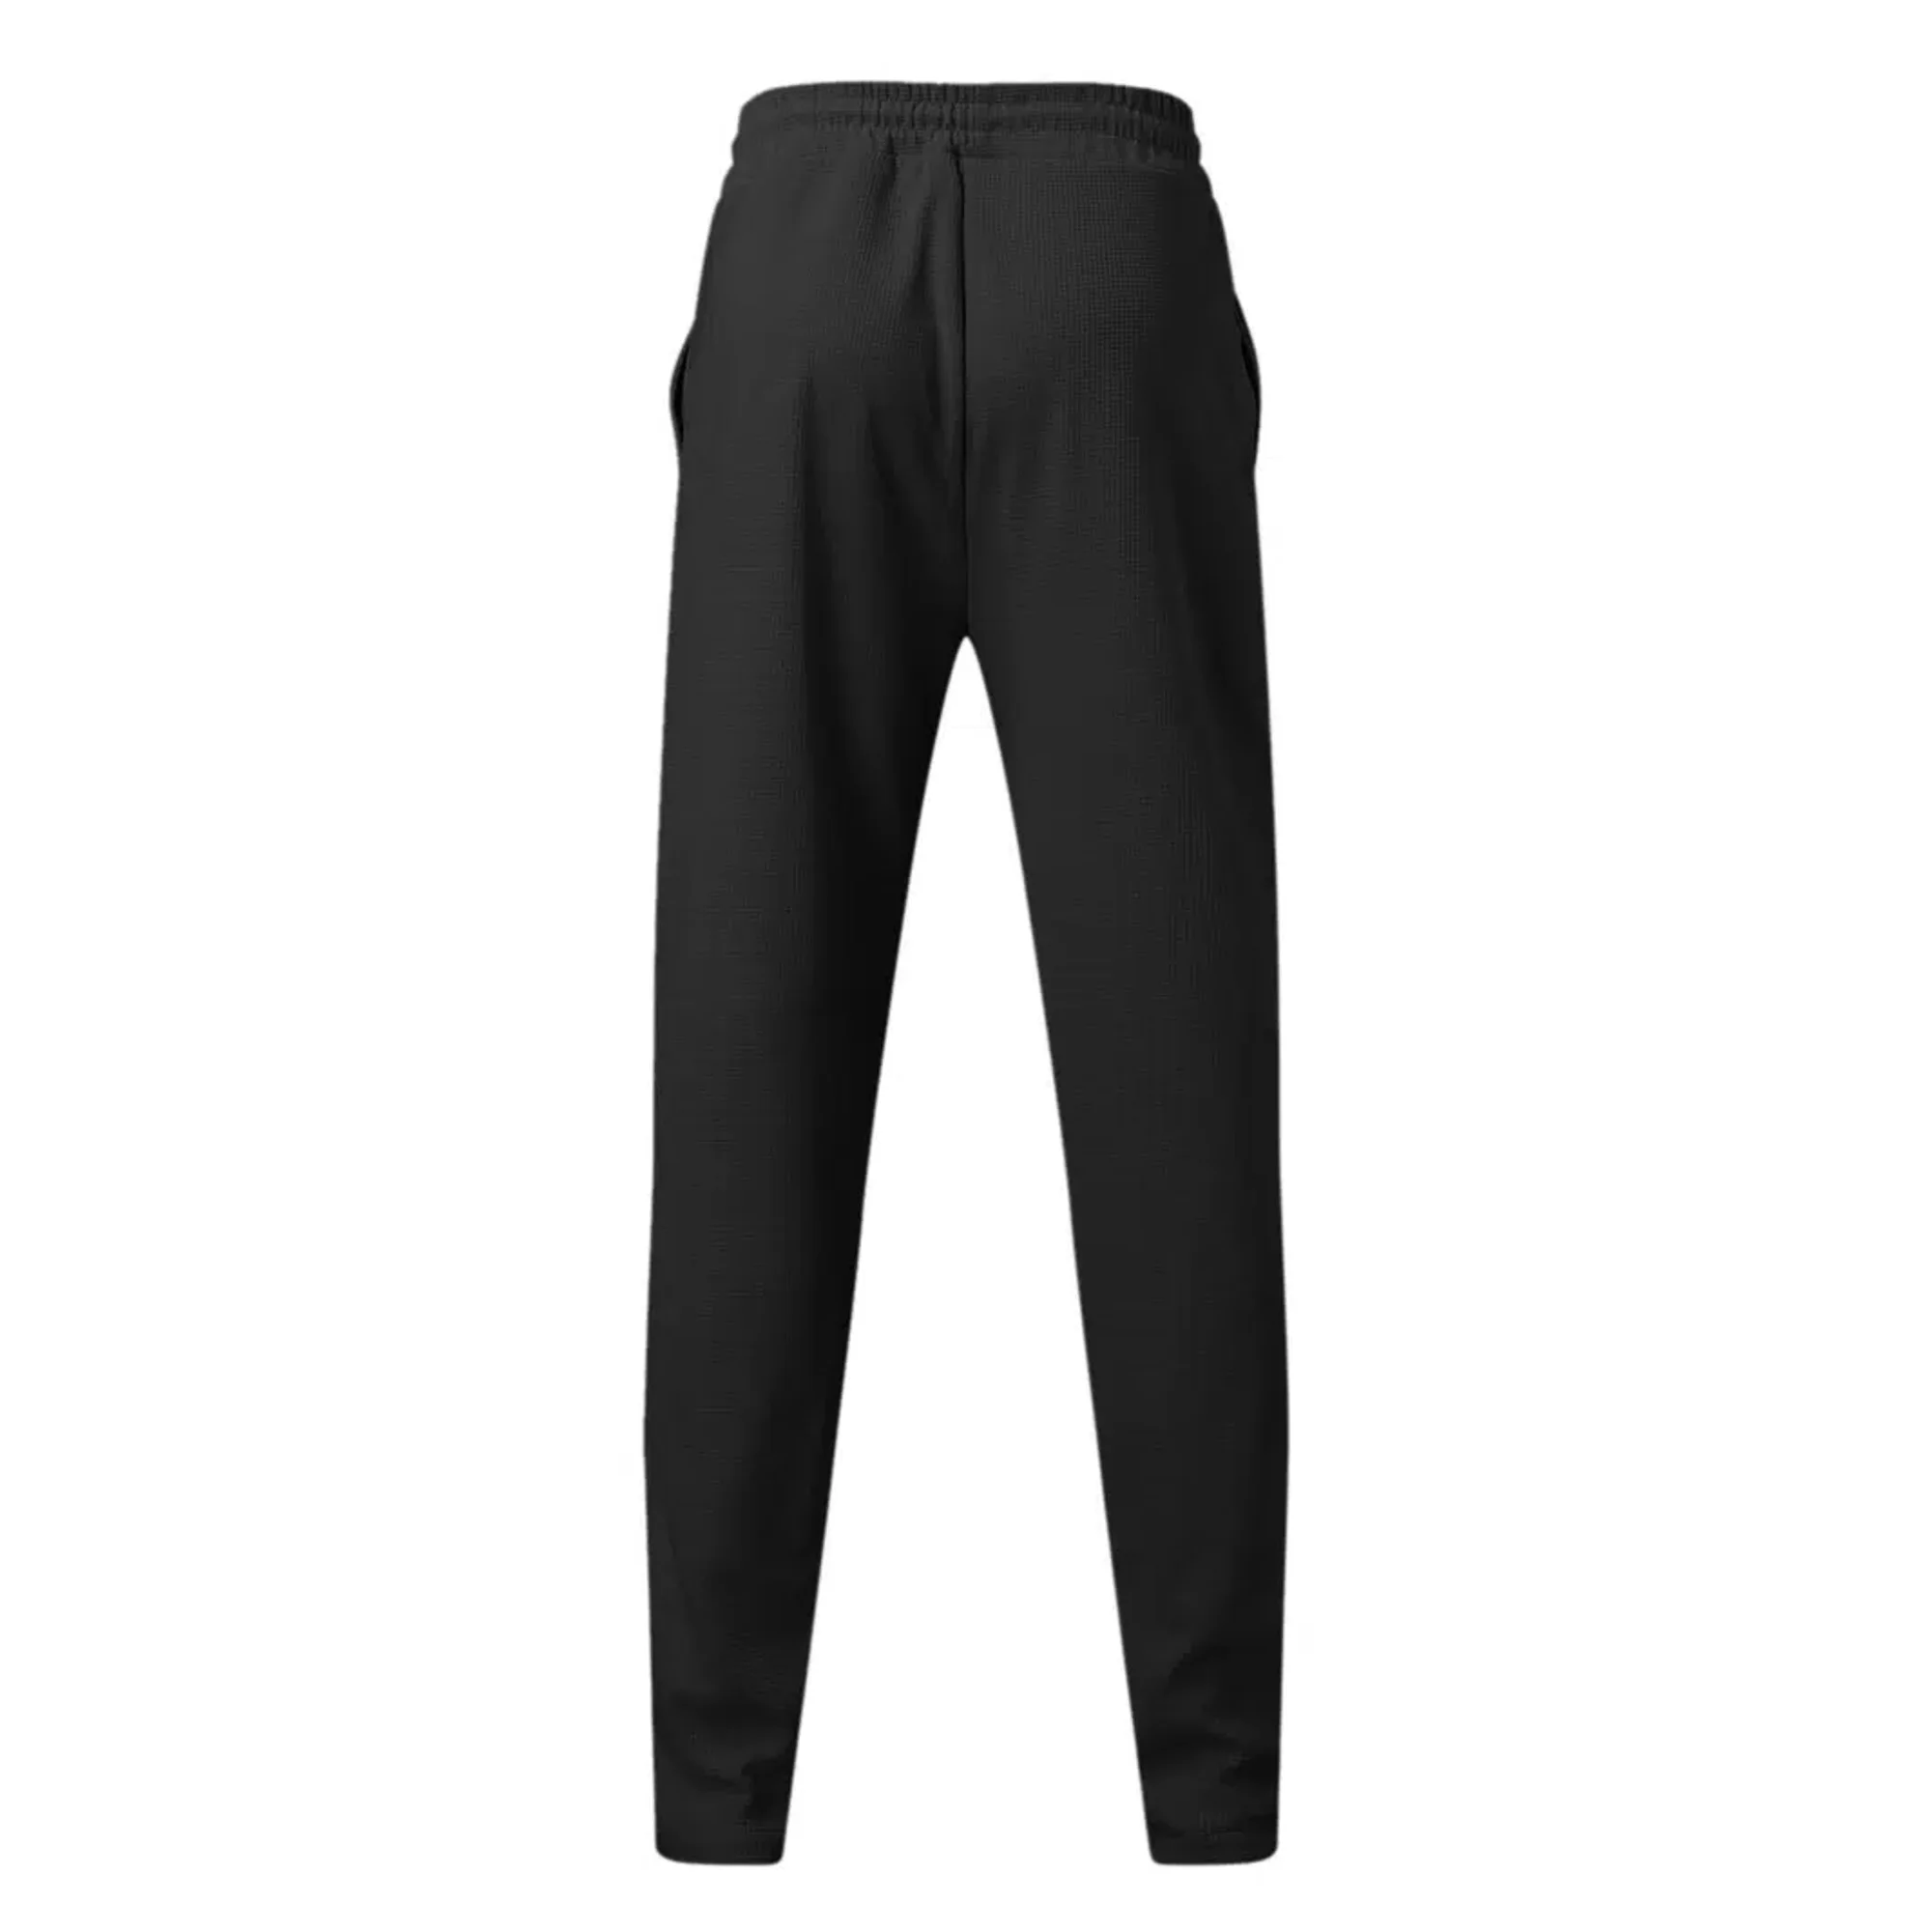 Men‘s Black Lapel Long Sleeve Polo Suit Plus Pants 2 Piece Set Sweatshirt Hoodies Christmas Gifts